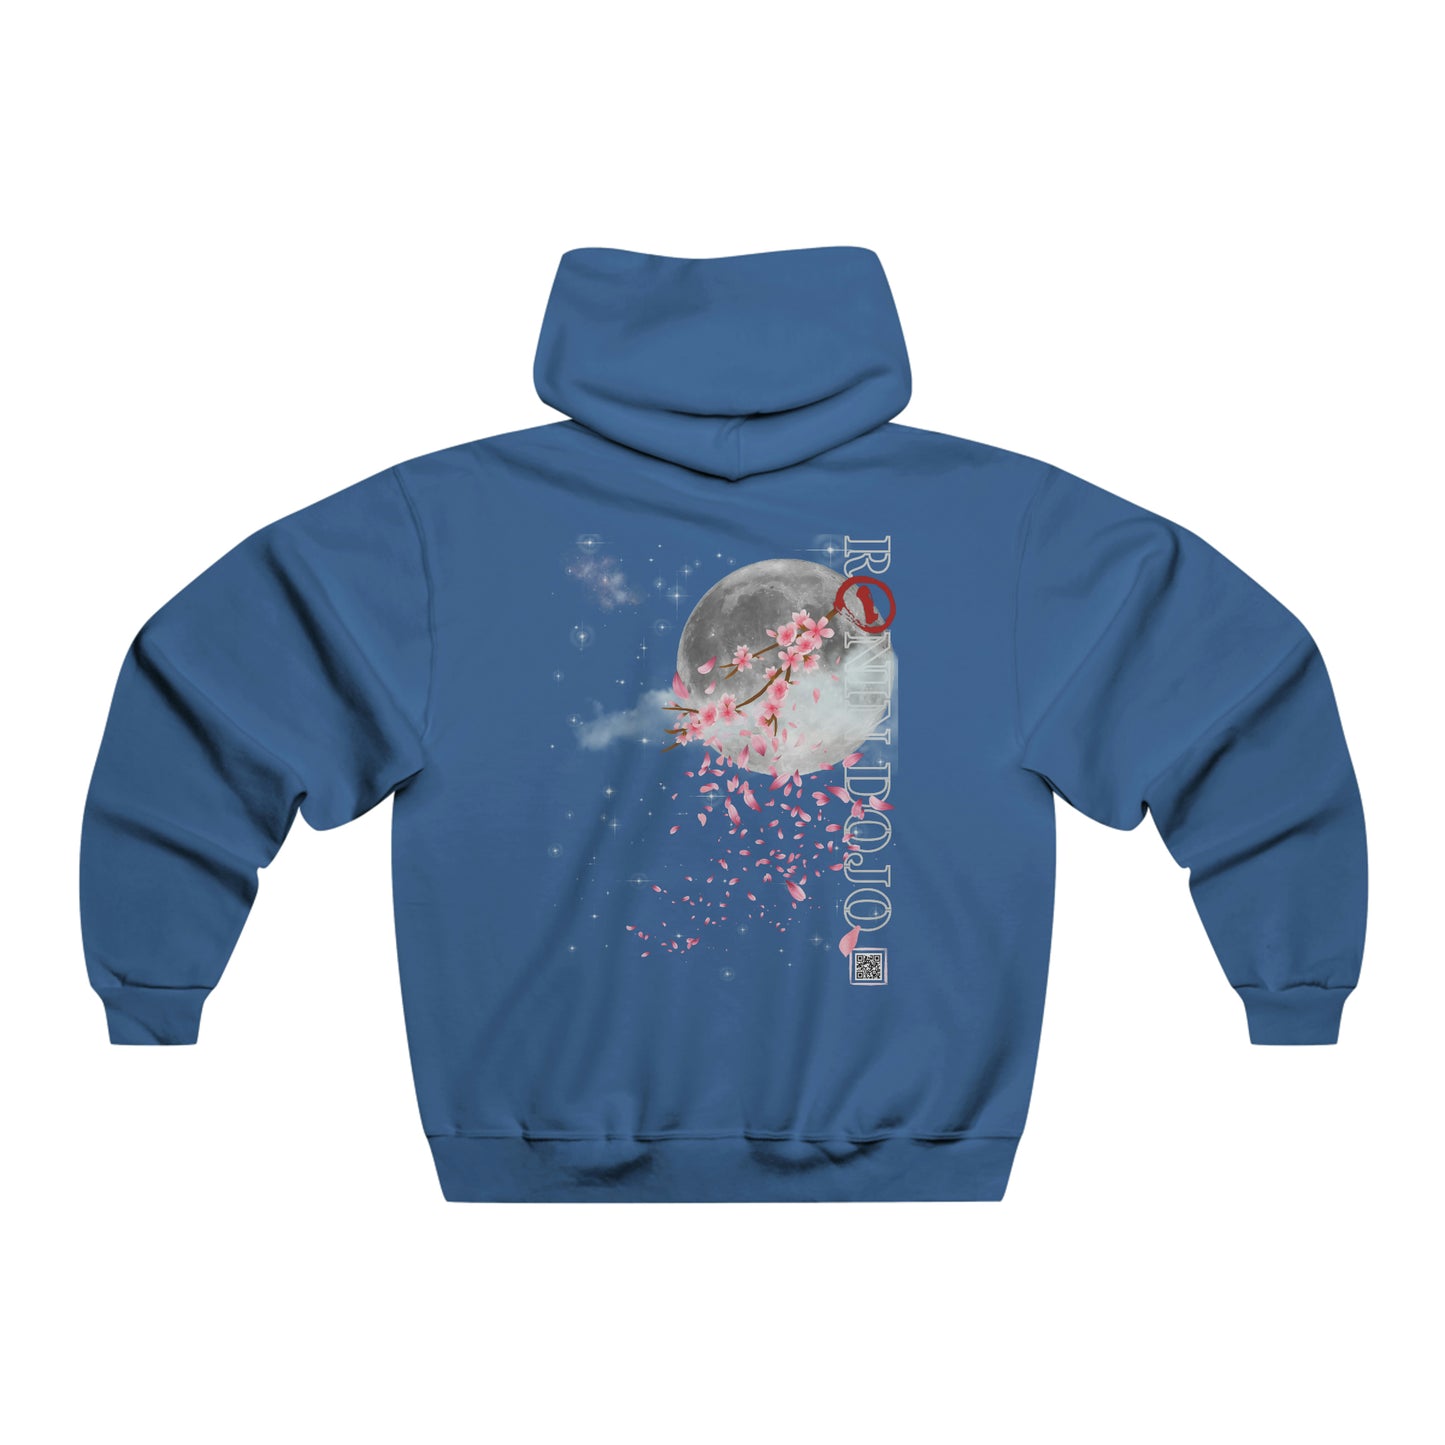 SAKURA MOON - Men's NUBLEND® Hooded Sweatshirt